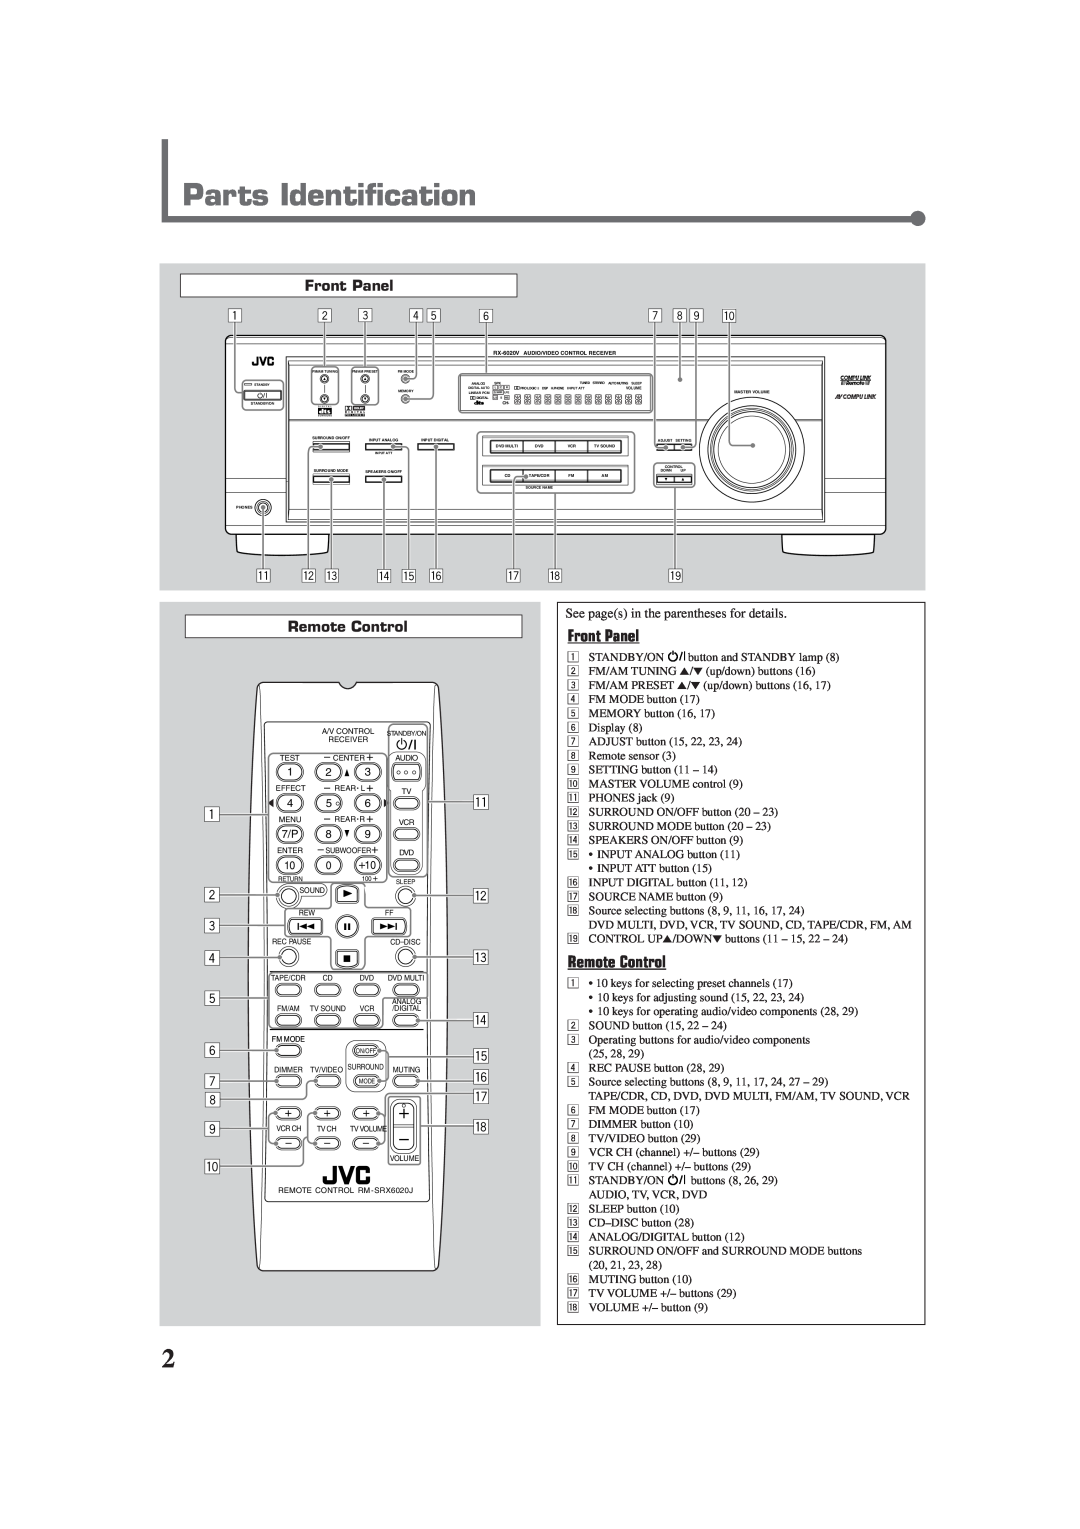 JVC RX-6020VBK manual Parts Identification, Front Panel, r t y 